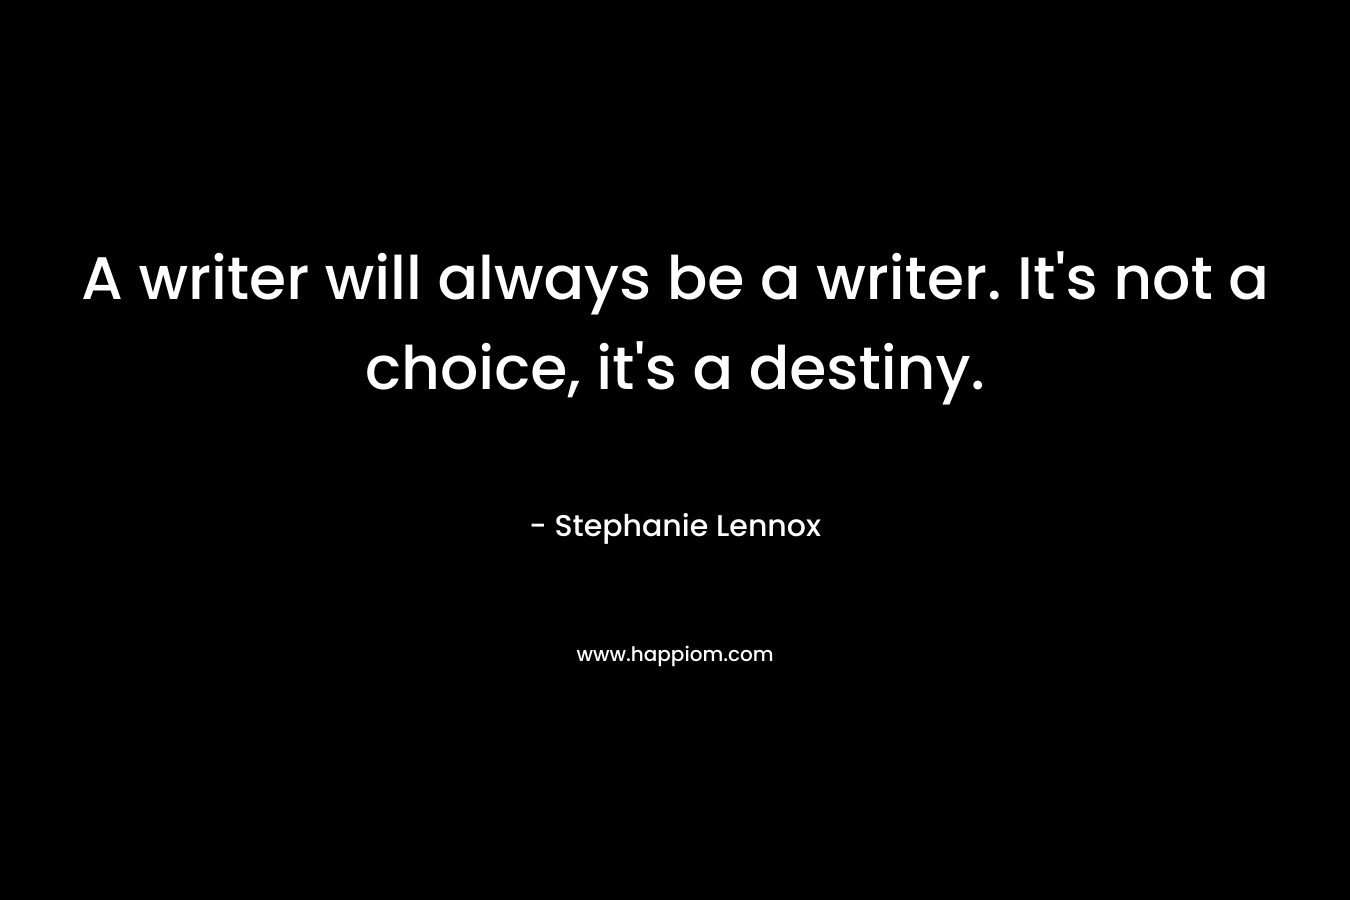 A writer will always be a writer. It’s not a choice, it’s a destiny. – Stephanie Lennox